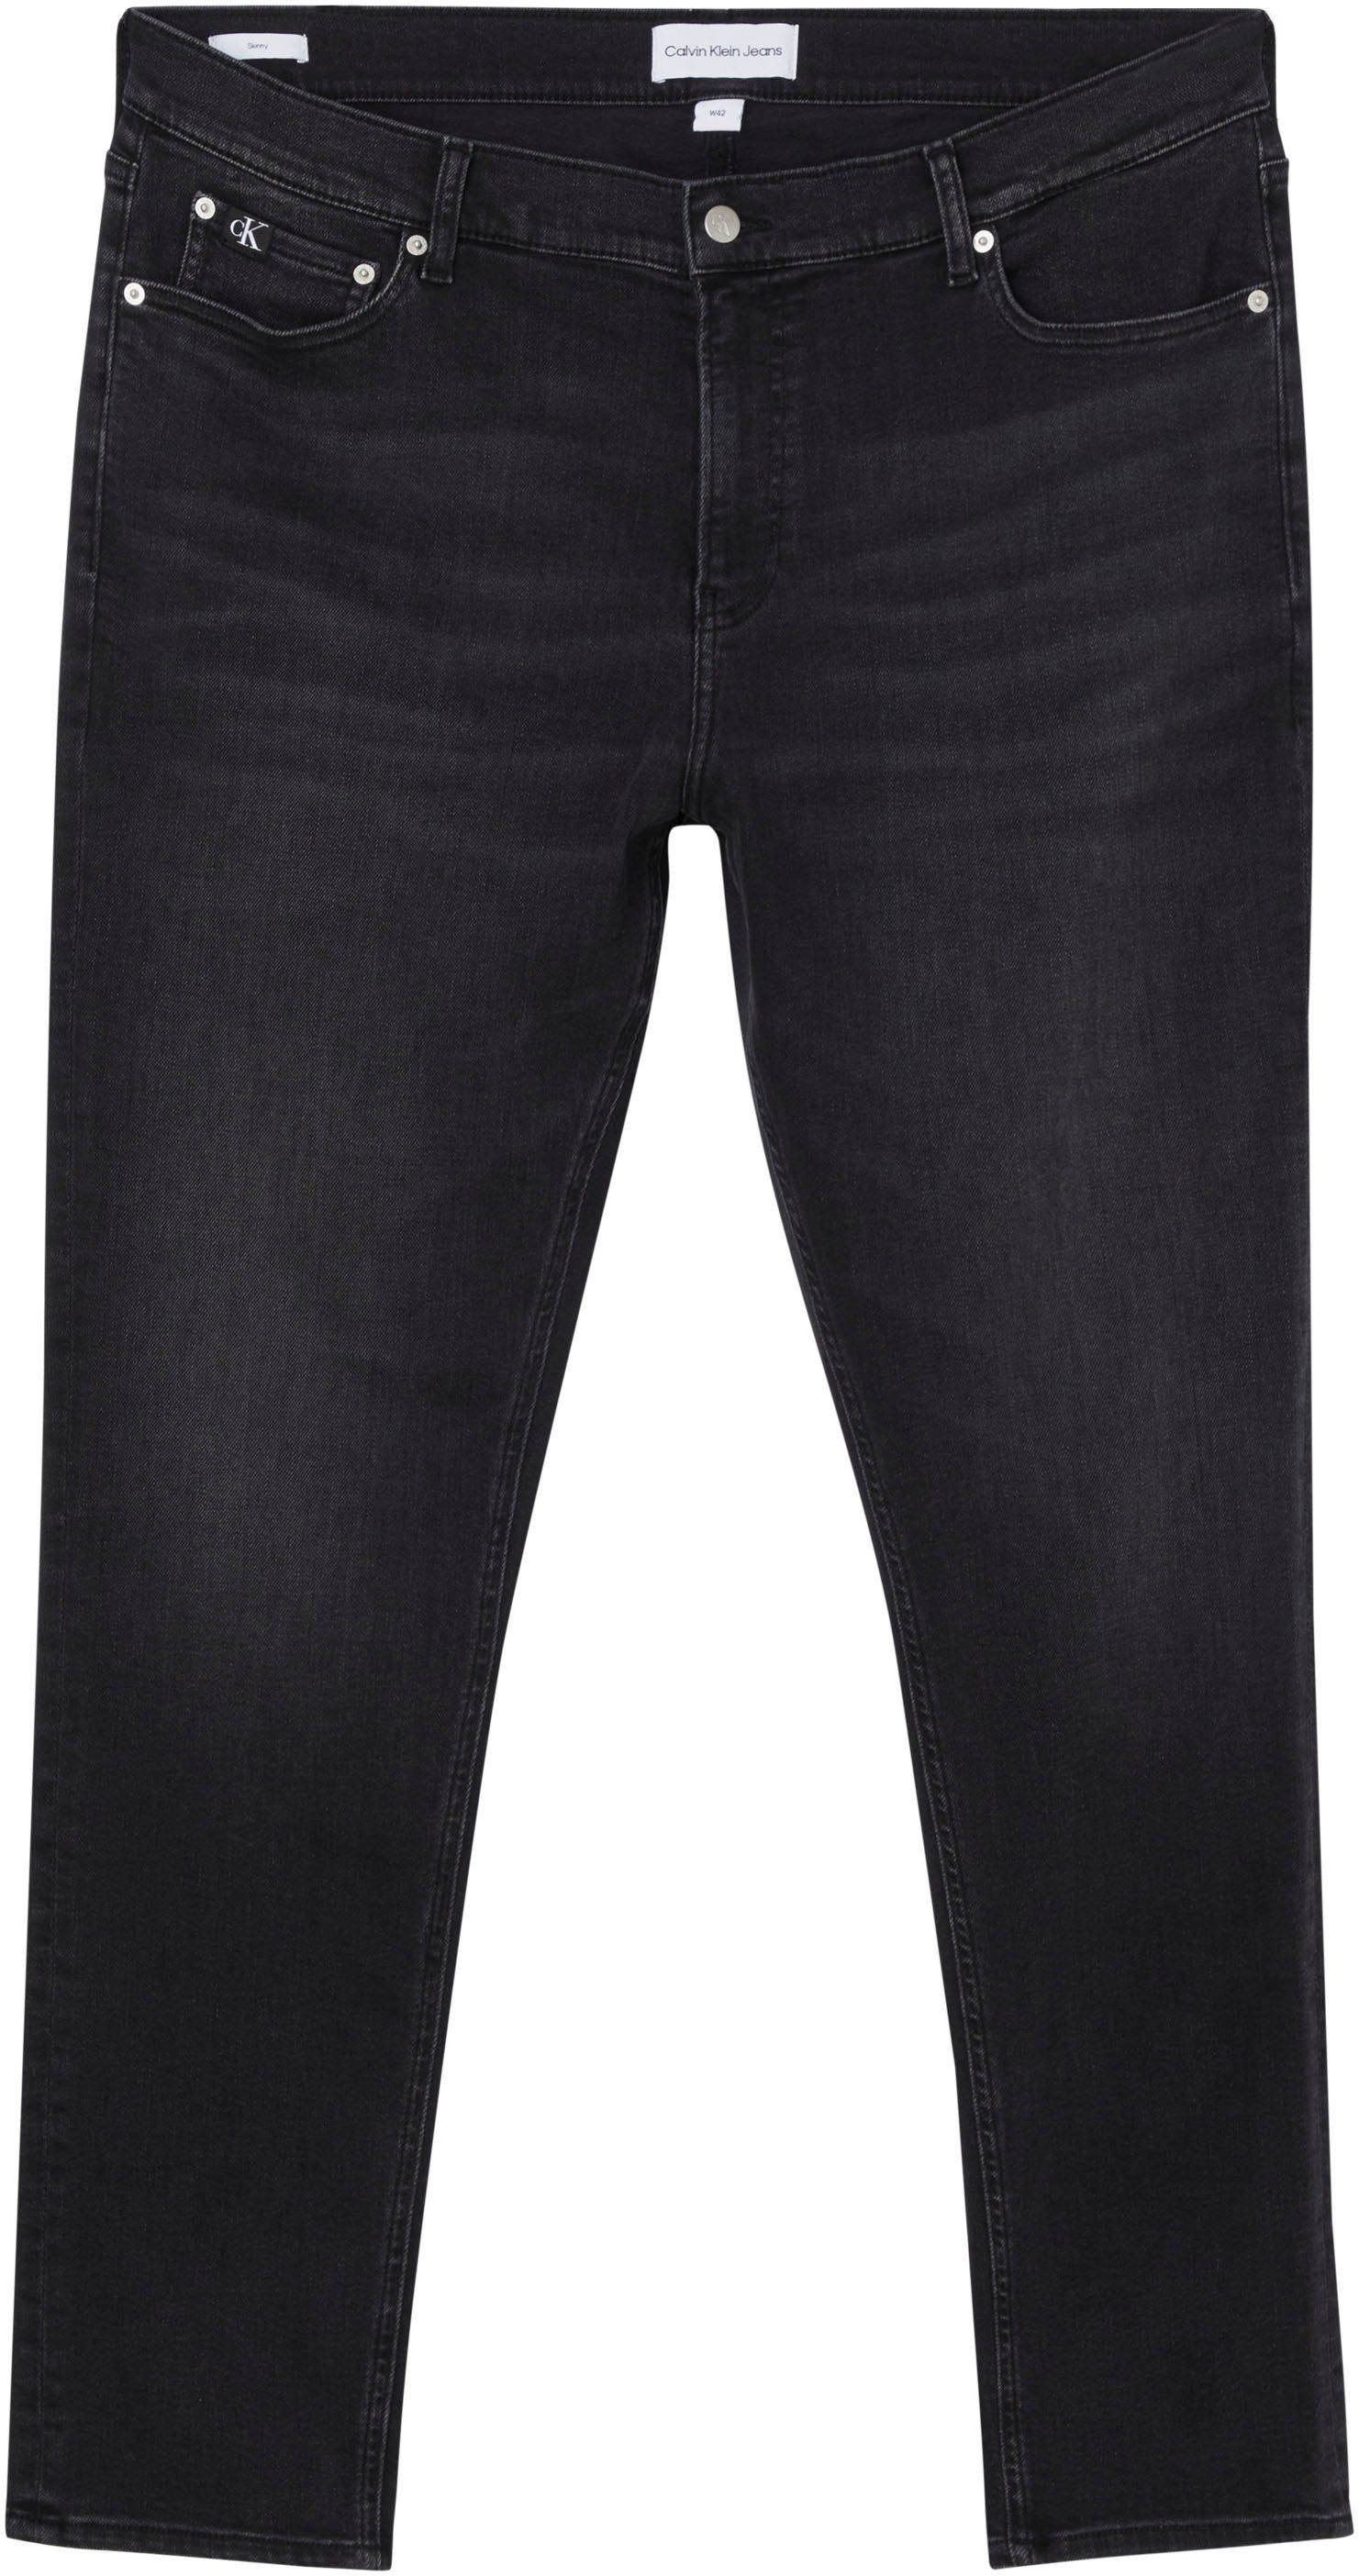 Klein SKINNY angeboten PLUS in Jeans wird Calvin Weiten Jeans Plus Skinny-fit-Jeans Denim_Black32